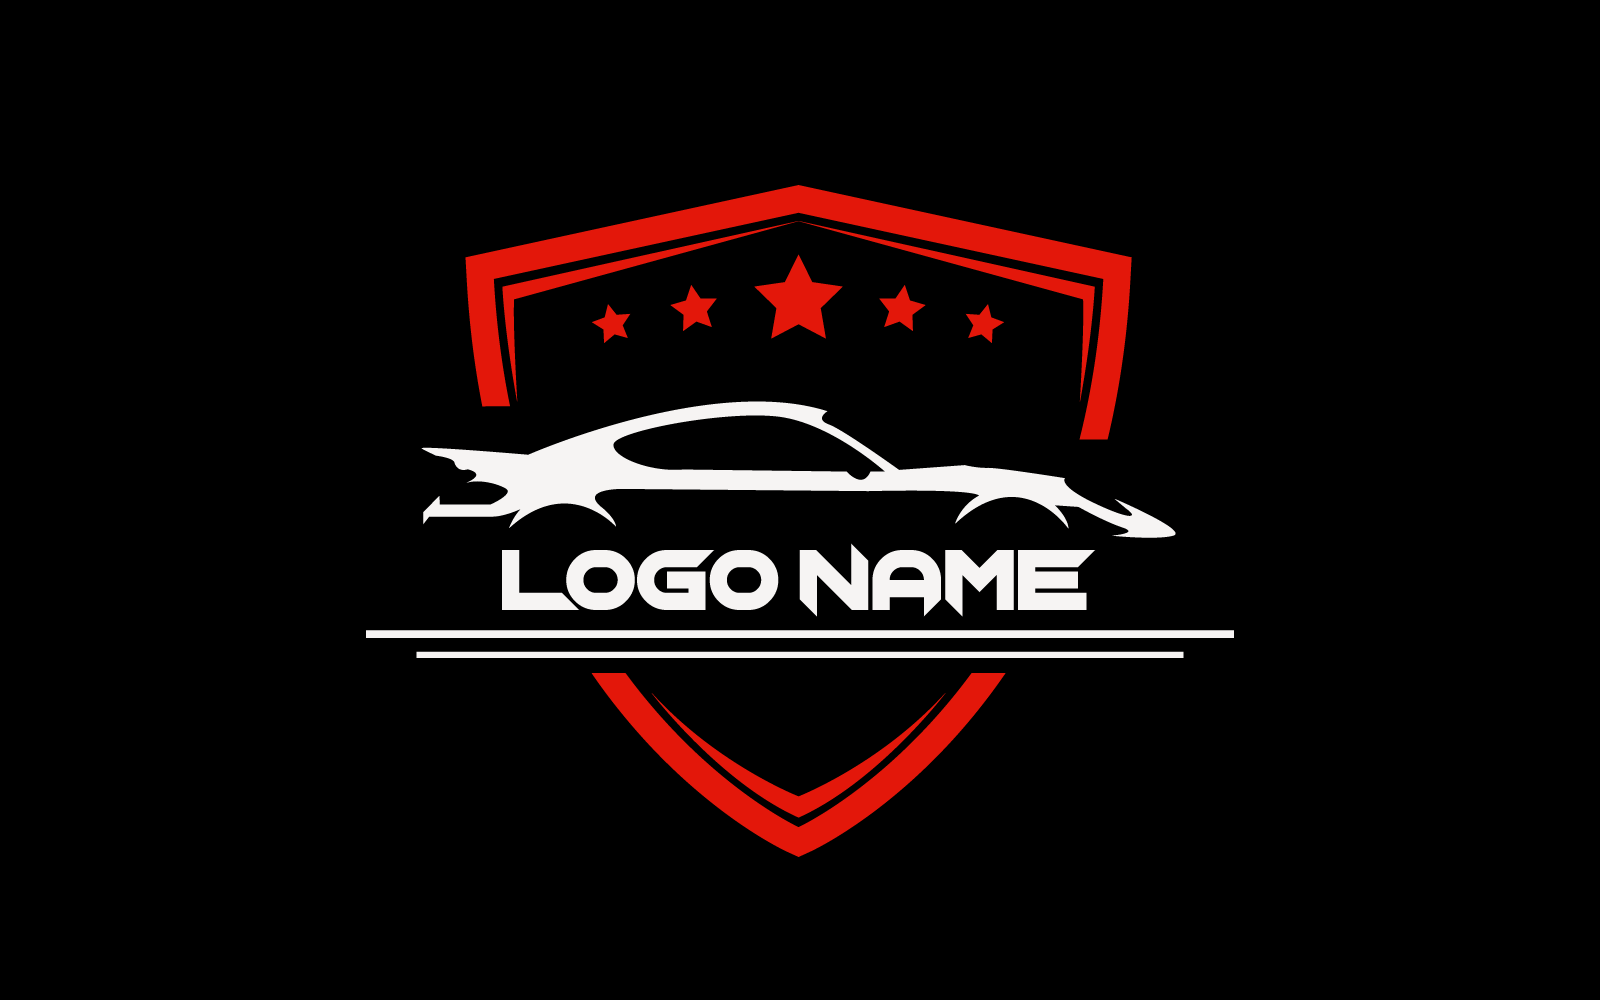 Universal Auto logo #LOGO #DESIGN #CAR #AUTO